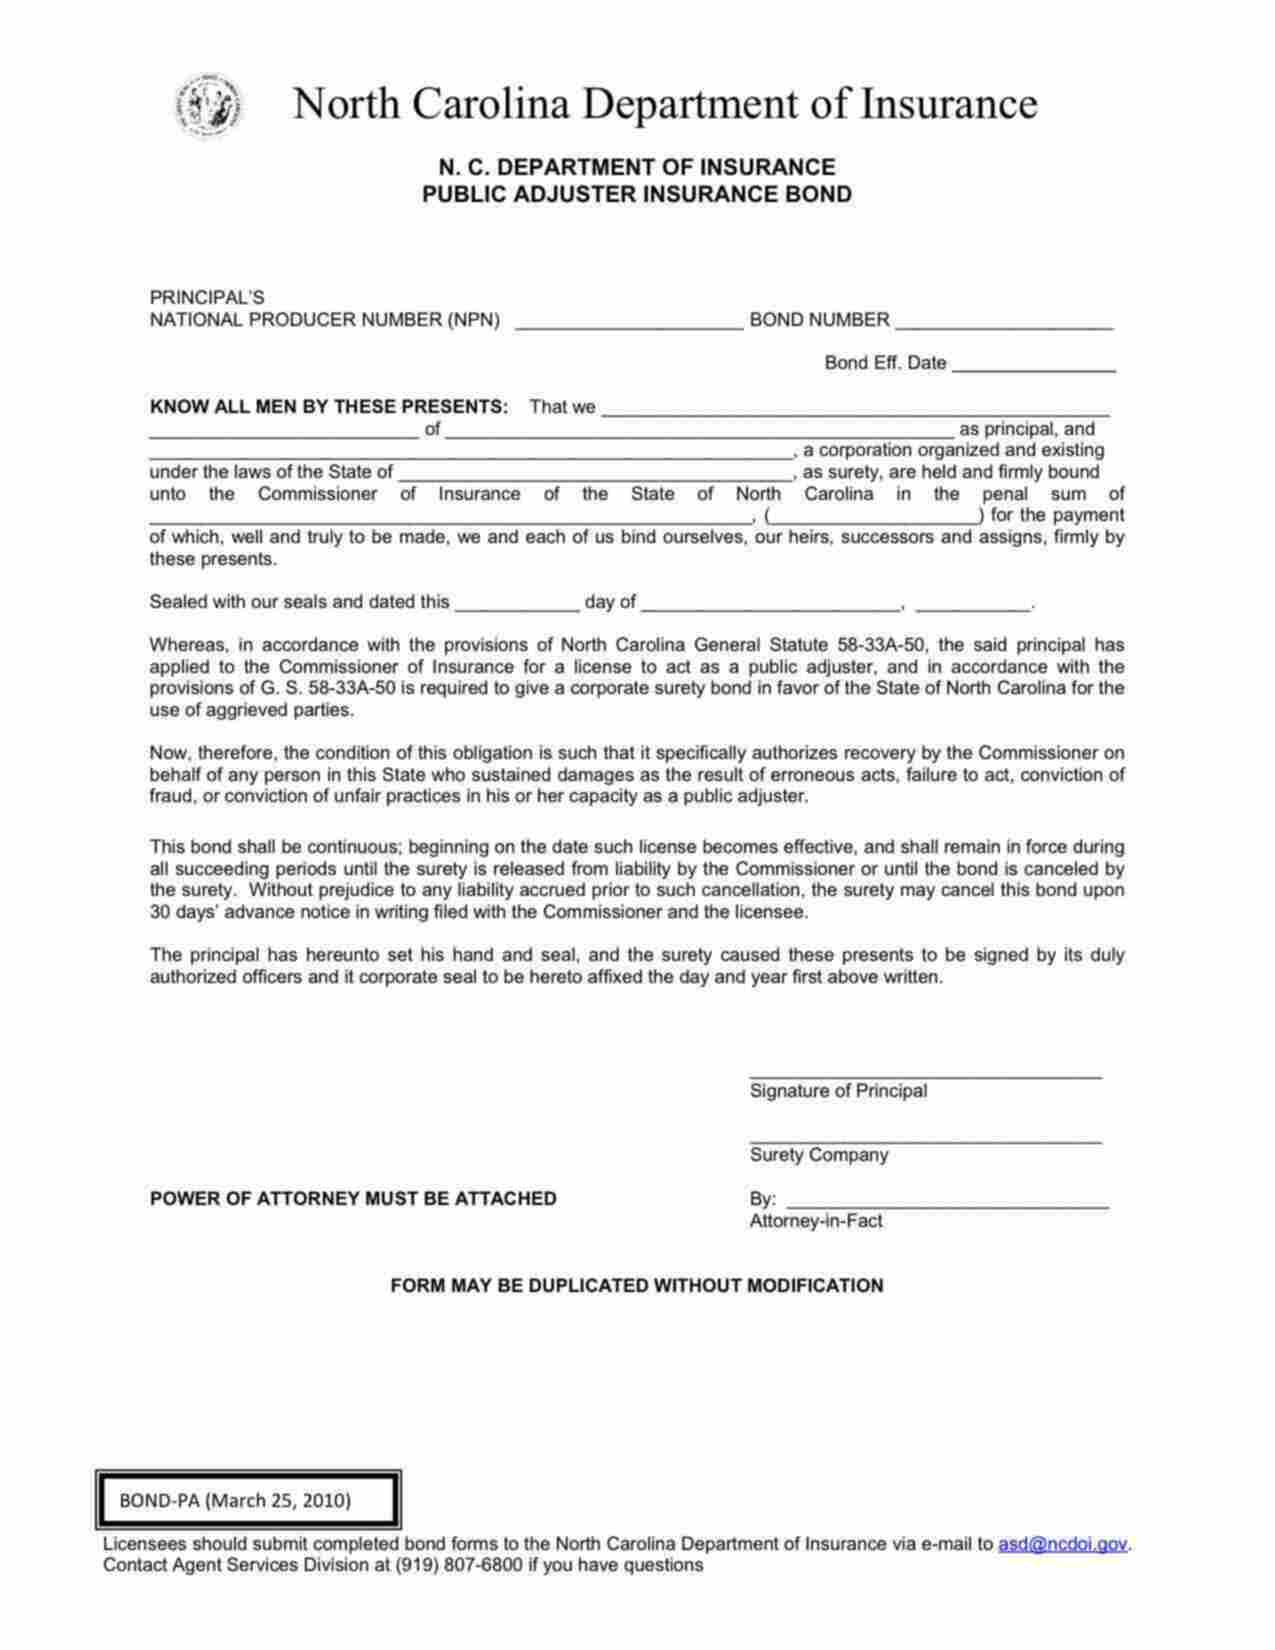 North Carolina Public Adjuster Bond Form